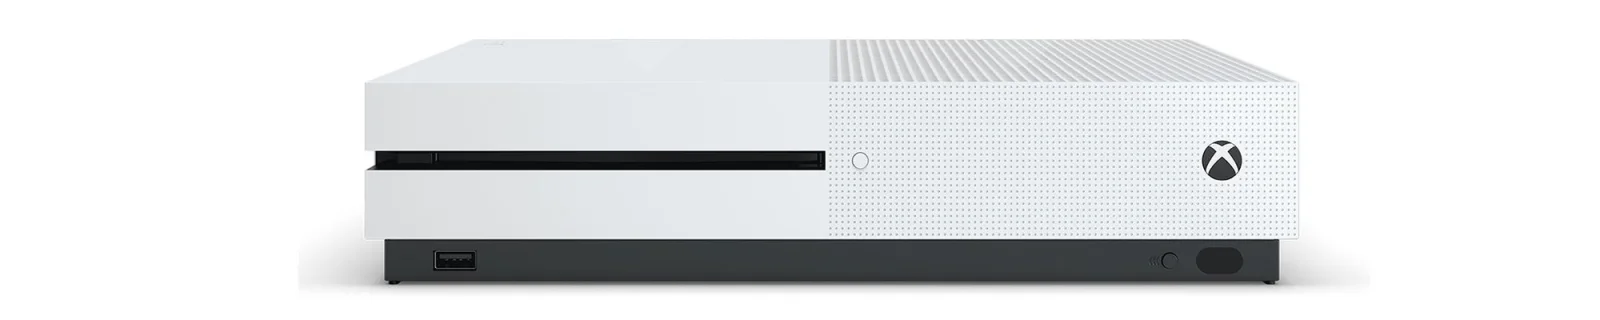 Xbox One如果用这个开机动画你会喜欢吗